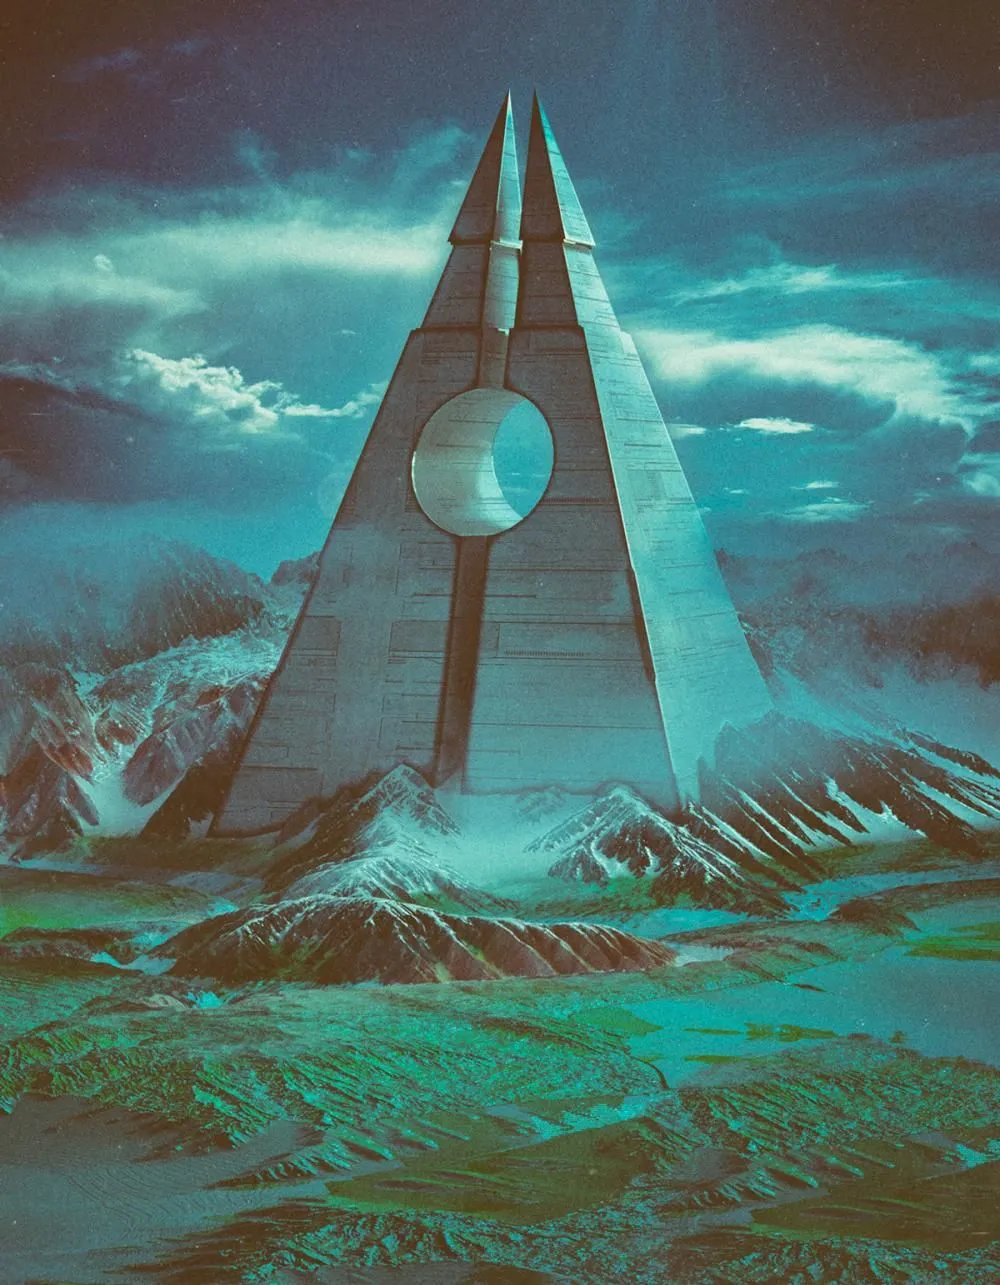 Pirâmide Mística - Ilustração de Mike Winkelmann, aka Beeple